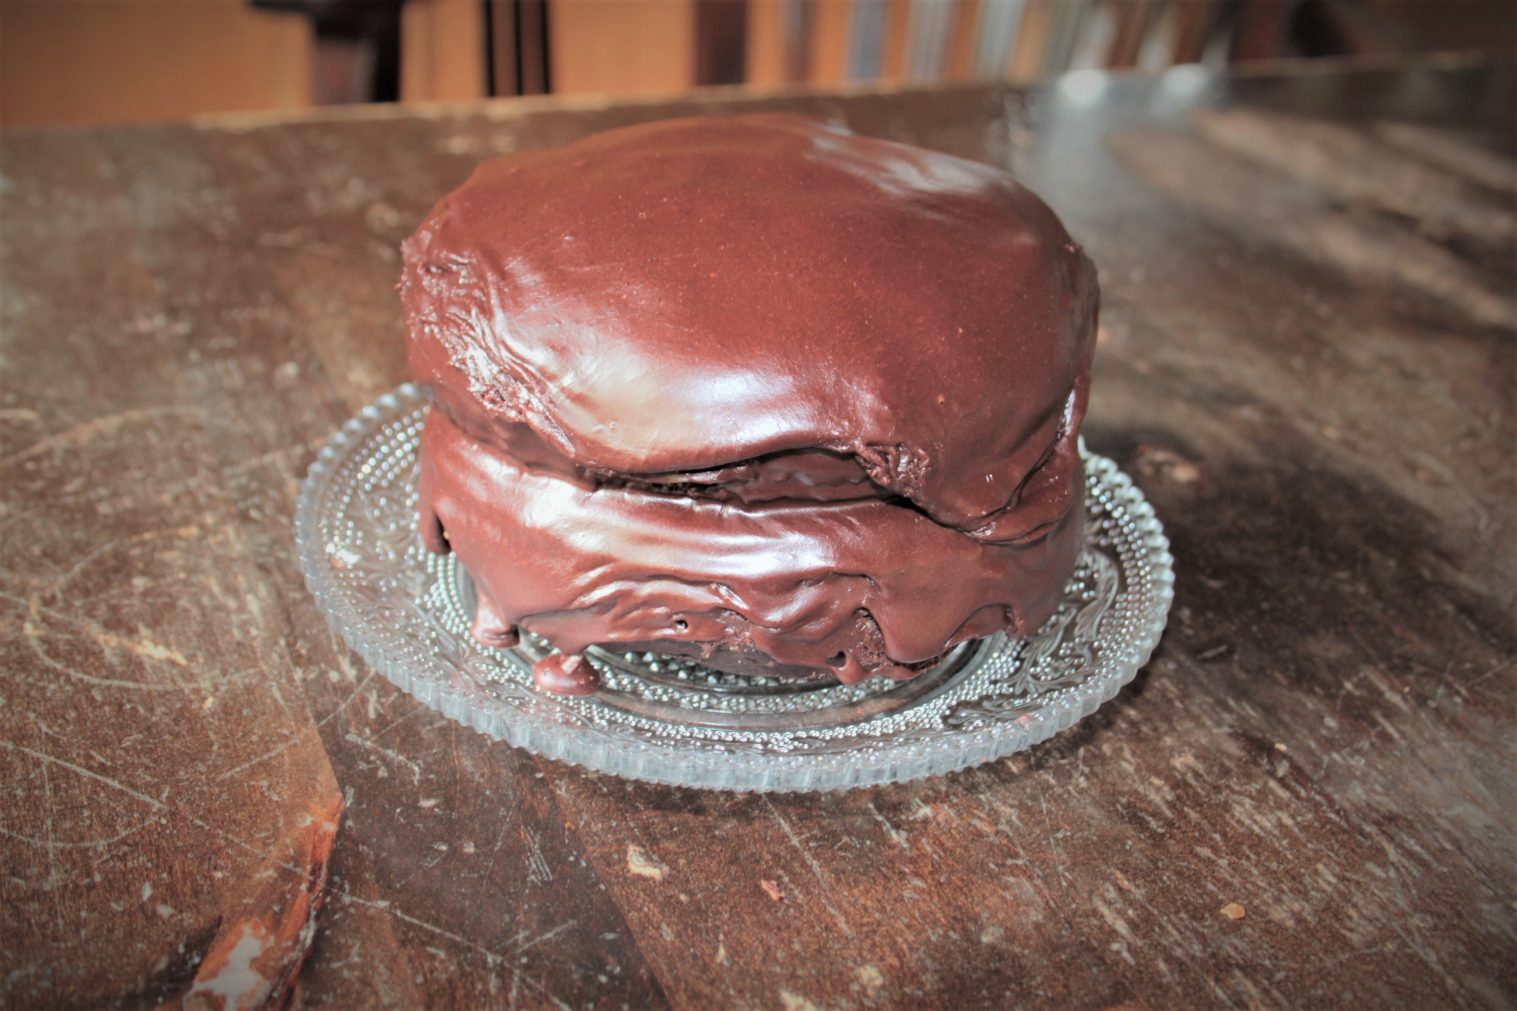 Decadent Chocolate Cake